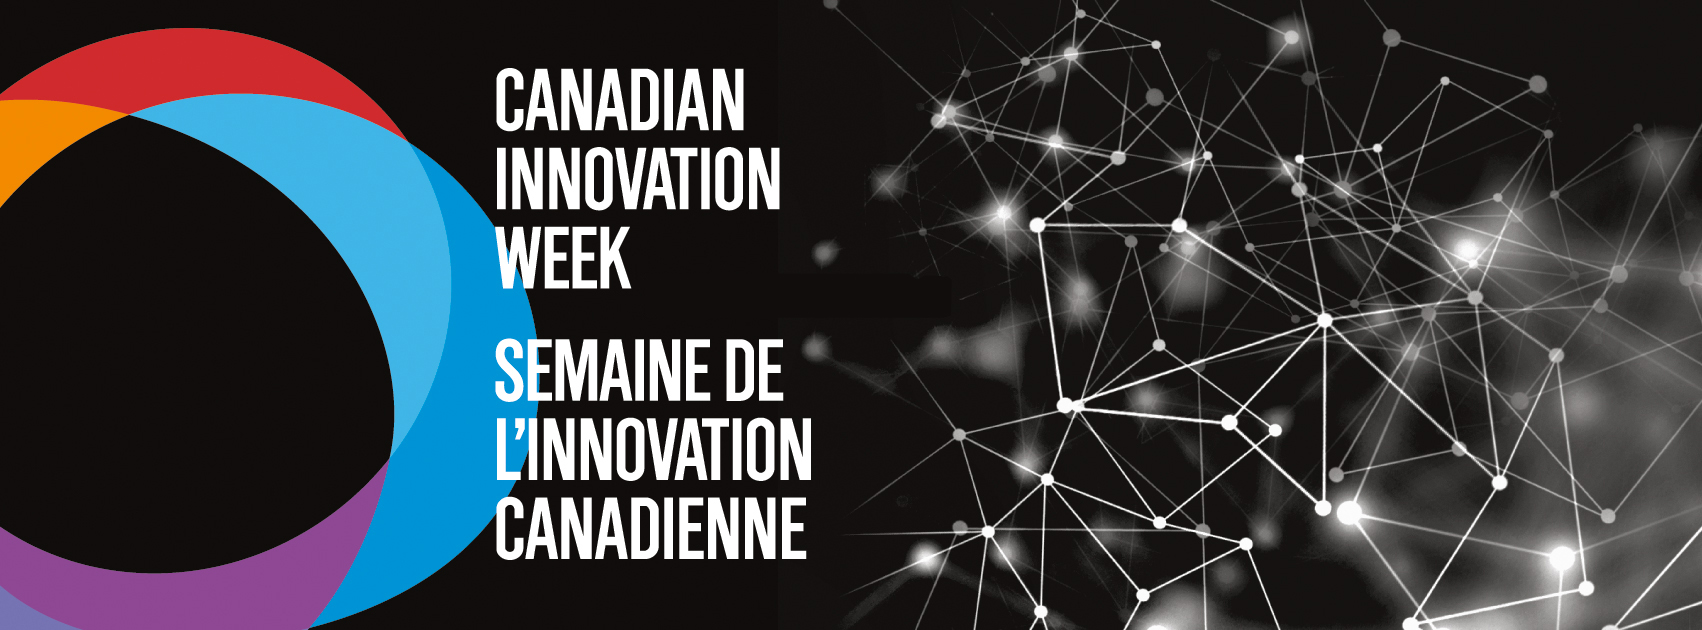 Canadian Innovation Week logo